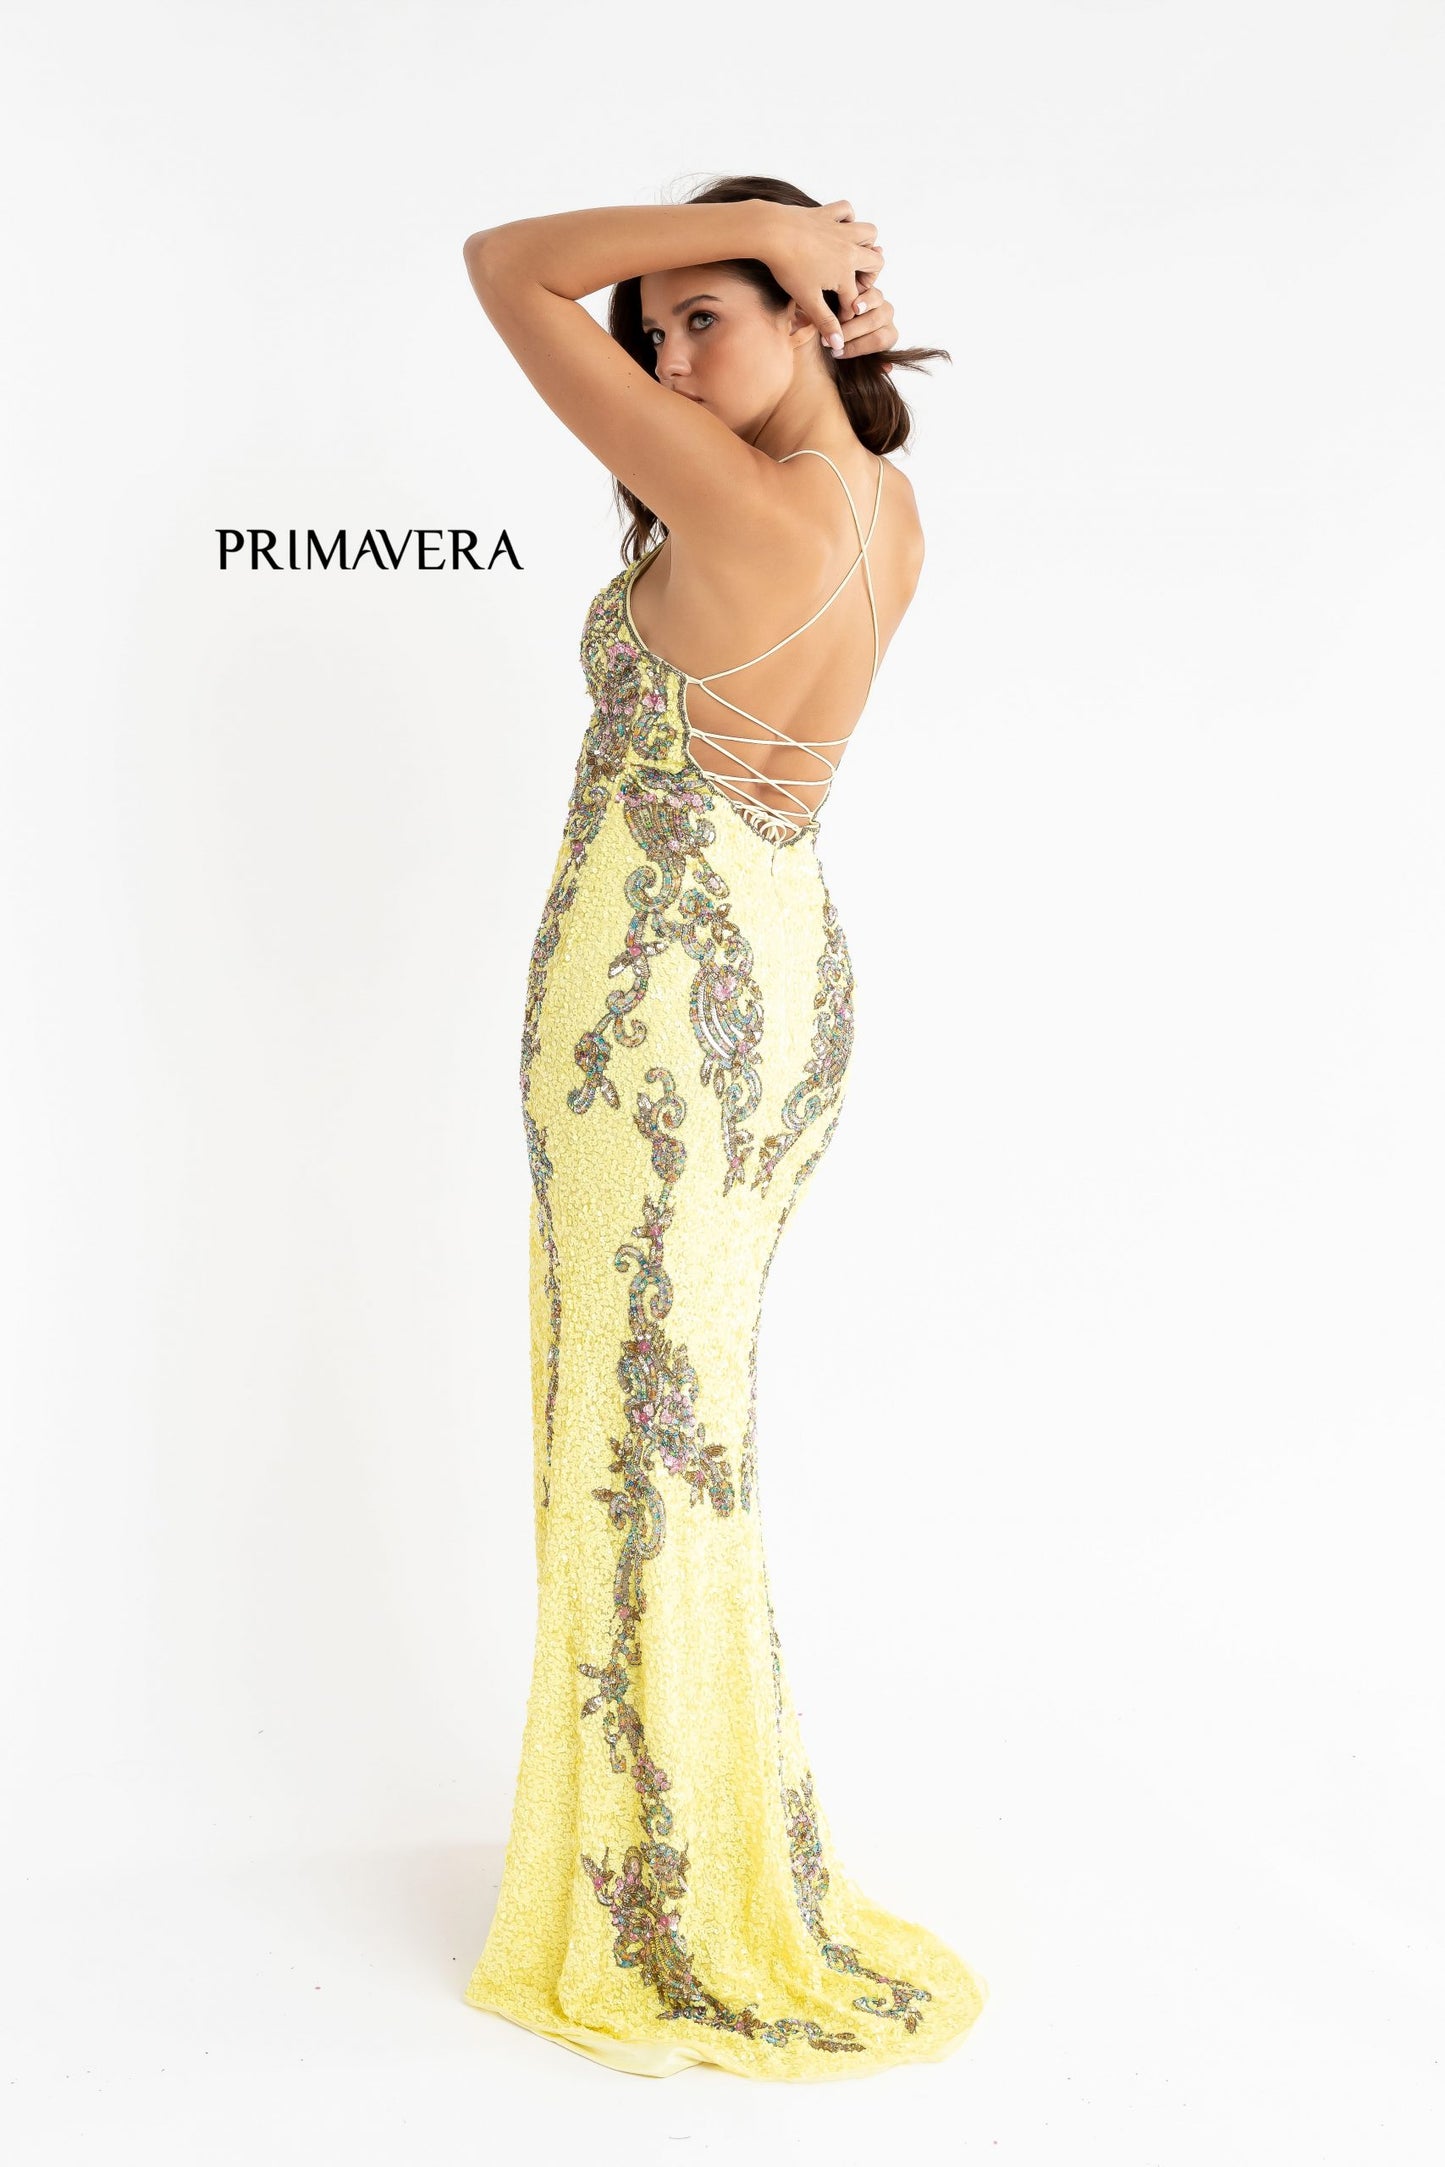    Primavera-Couture-3211-Yellow-prom-dress-back-v-neckline-floral-sequins-lace-up-tie-back-slit.